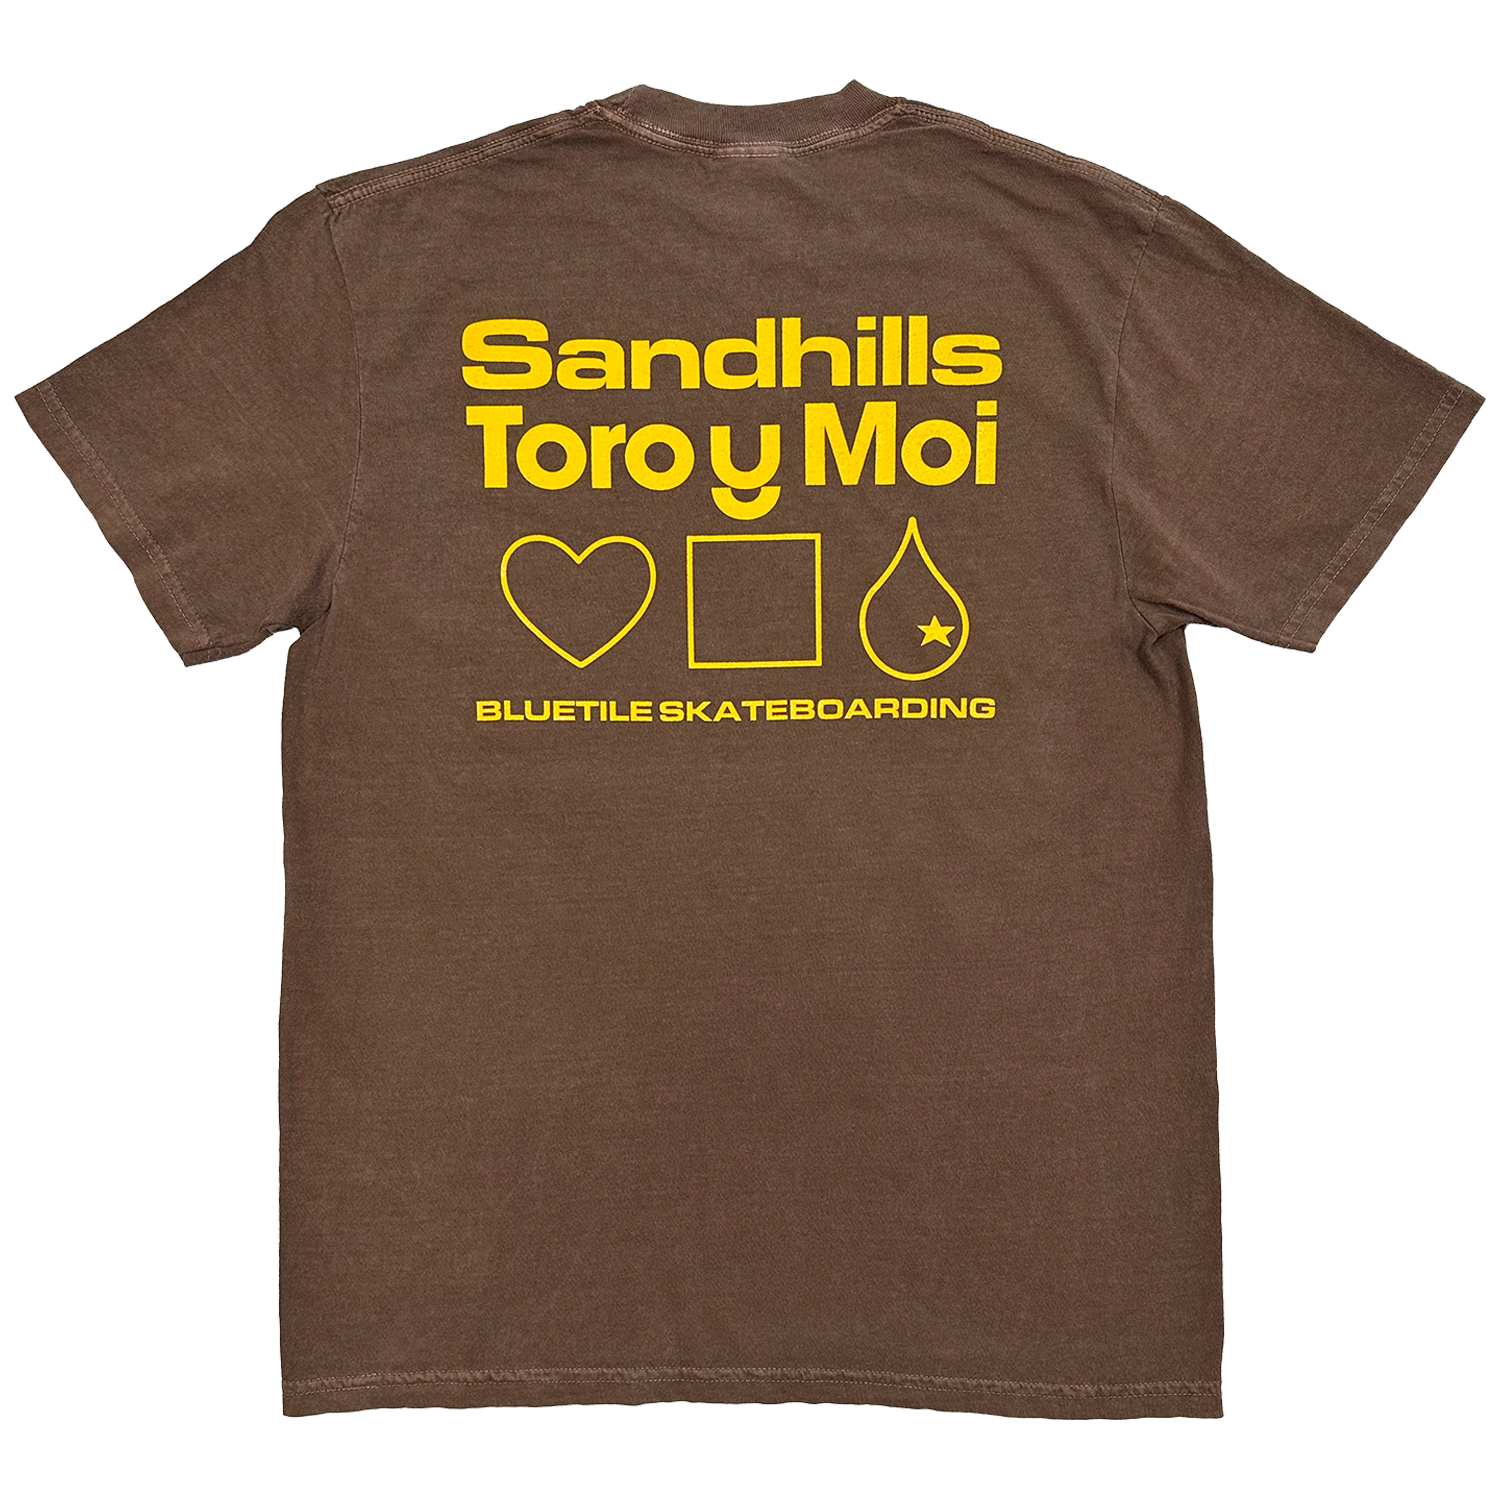 Toro y Moi x Bluetile Skateboarding - Sandhills T-Shirt - Brown